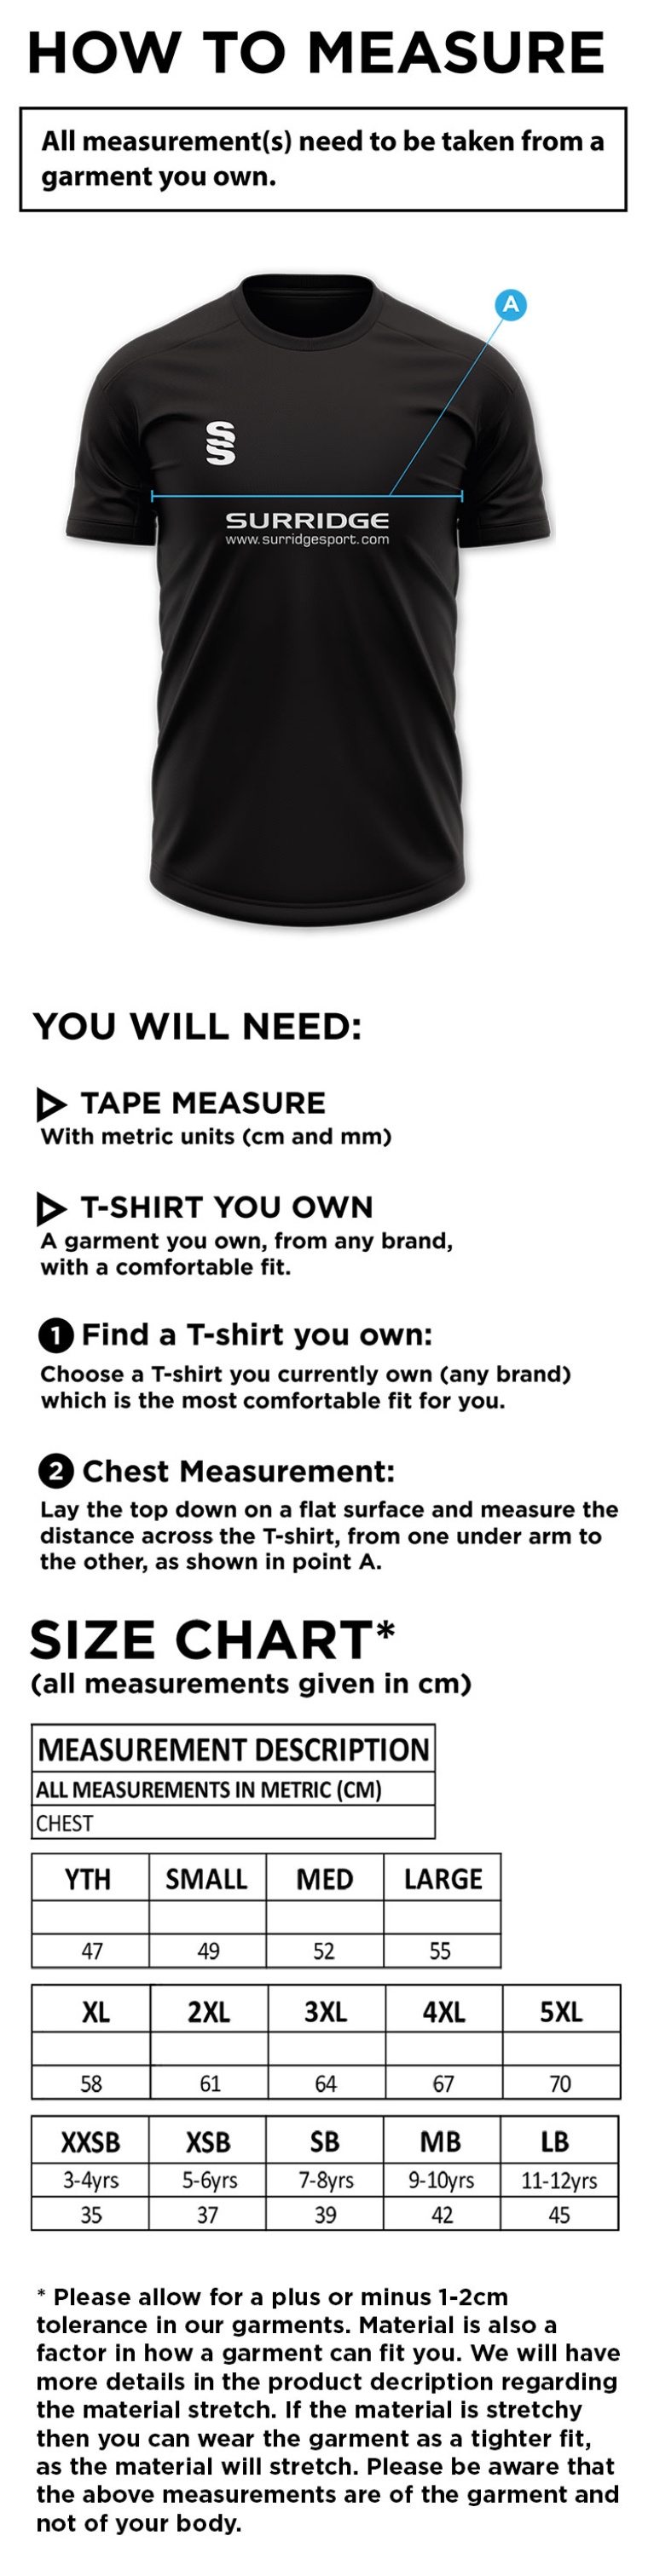 Blade Polo Shirt : Black / White - Size Guide